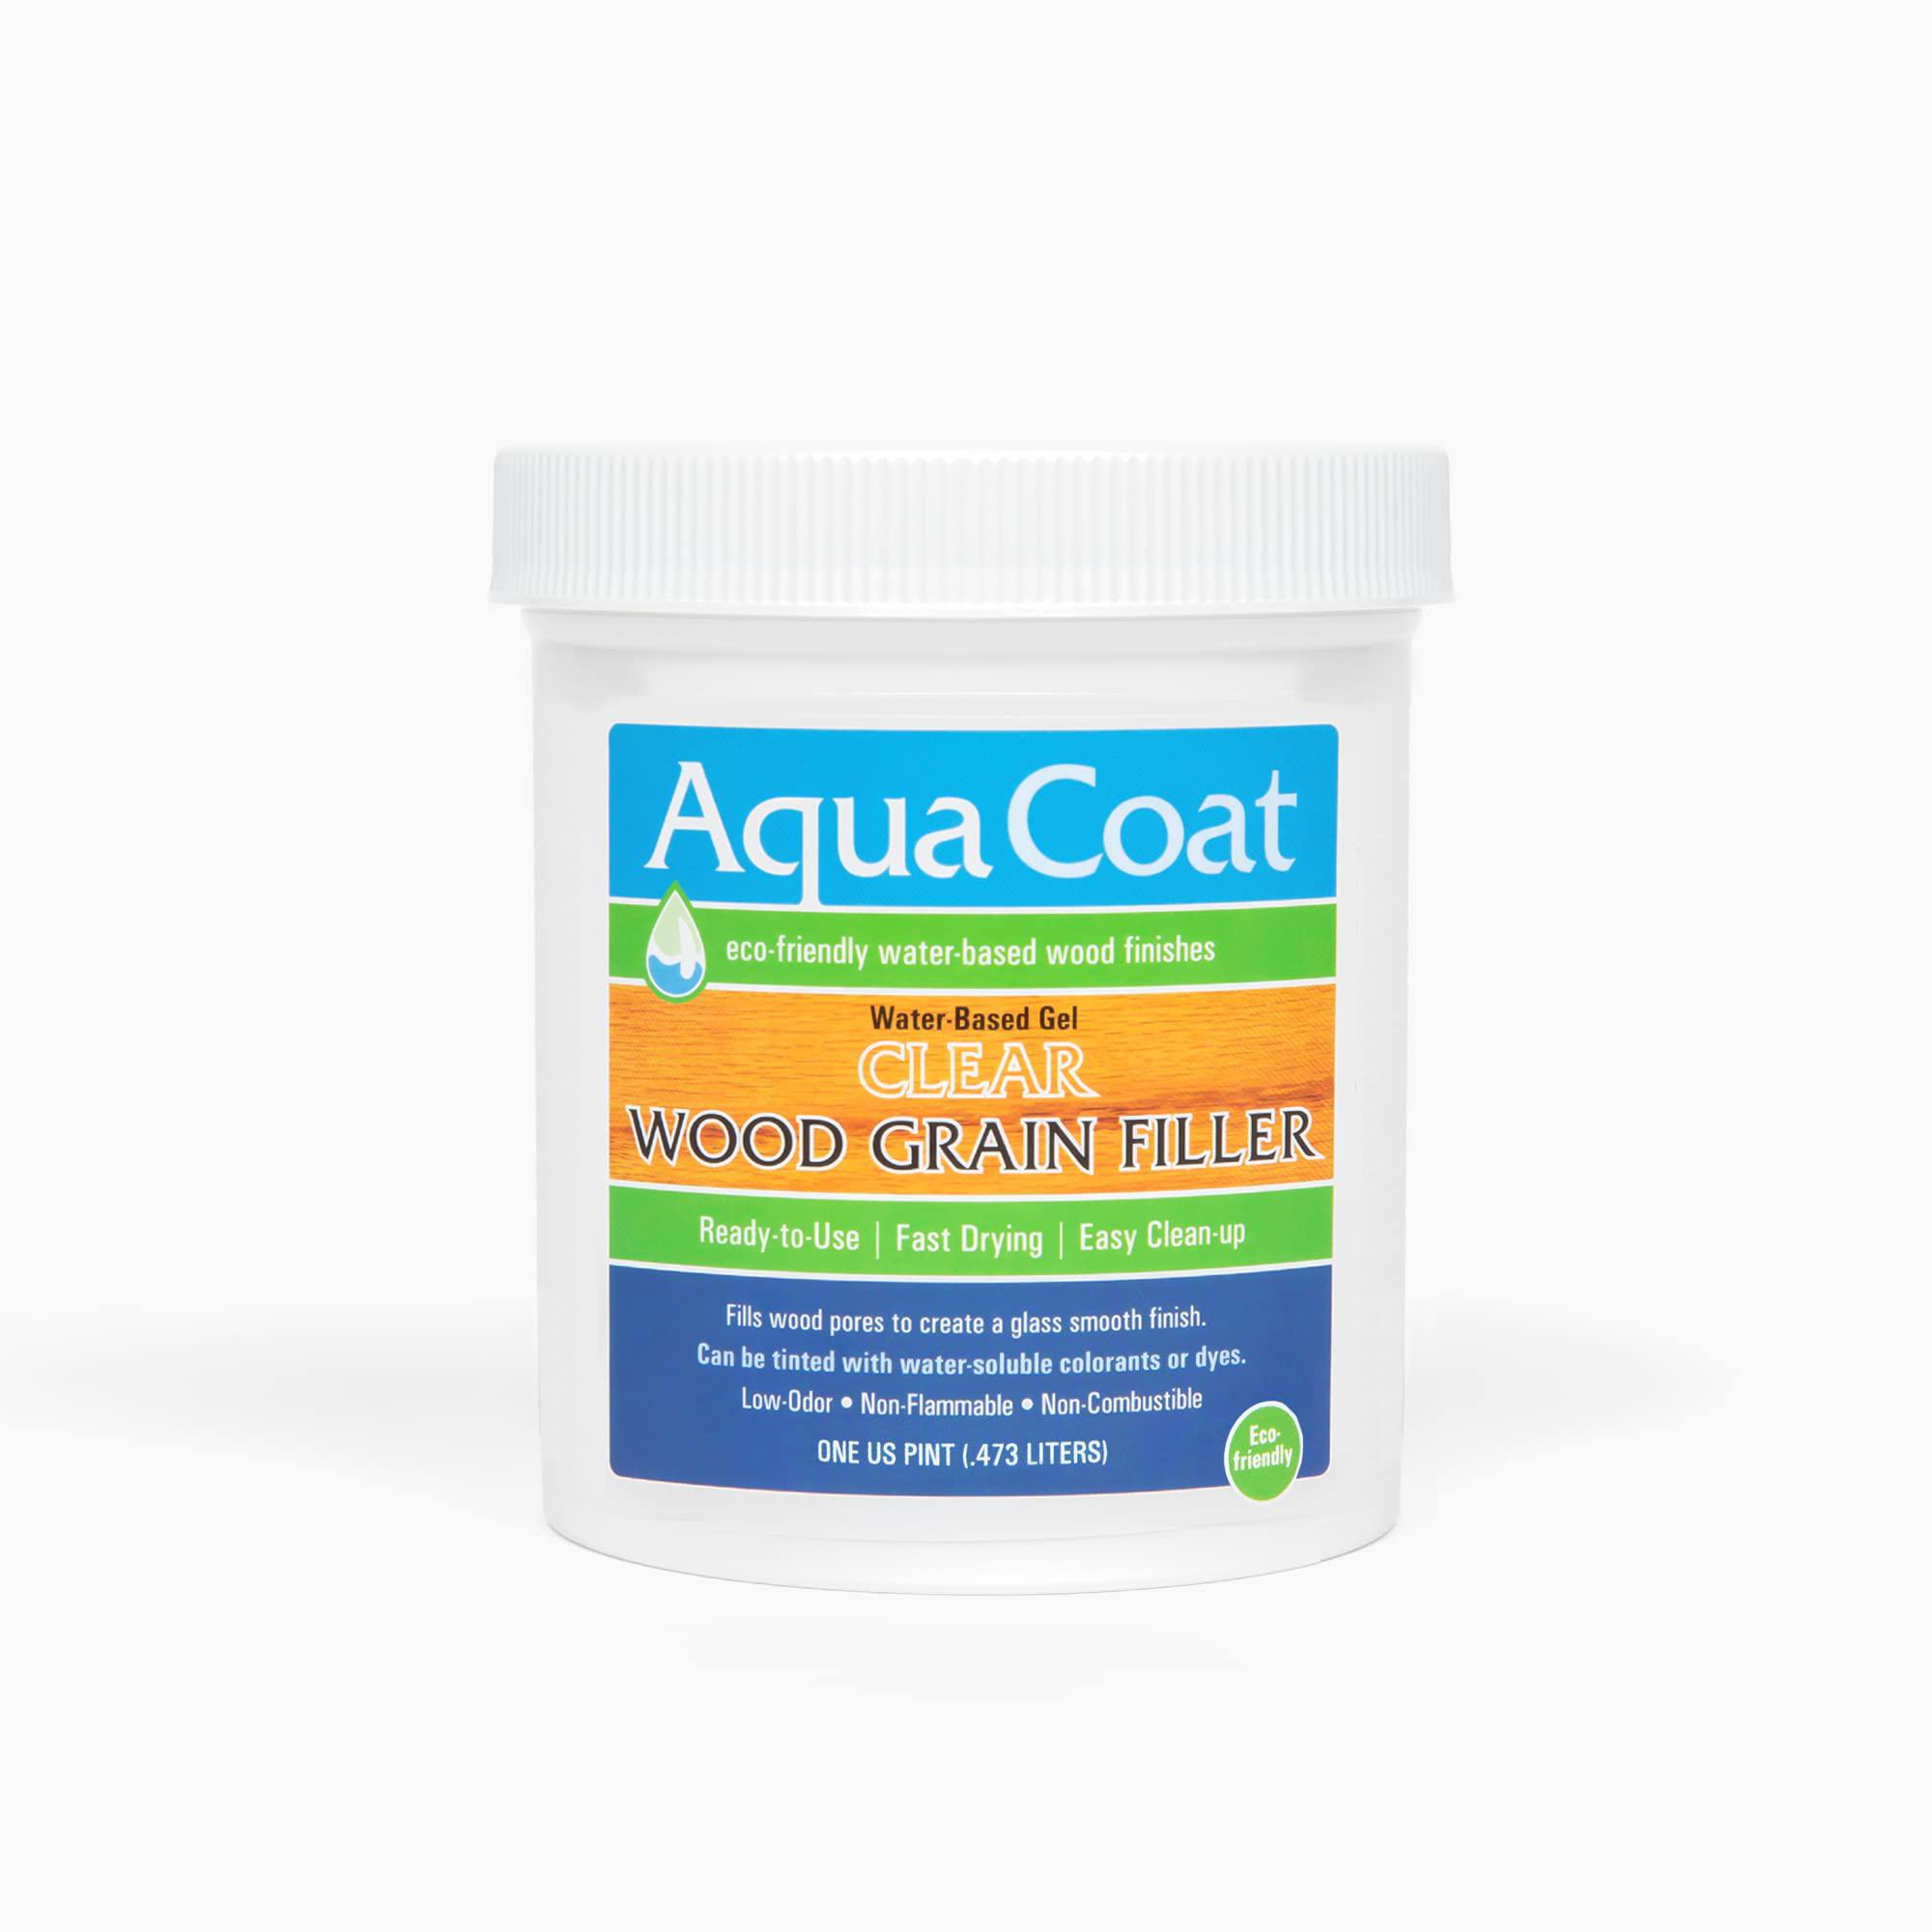 aqua coat water based clear wood grain filler gel, great for home improvement and diy woodworking professionals, low odor, fa